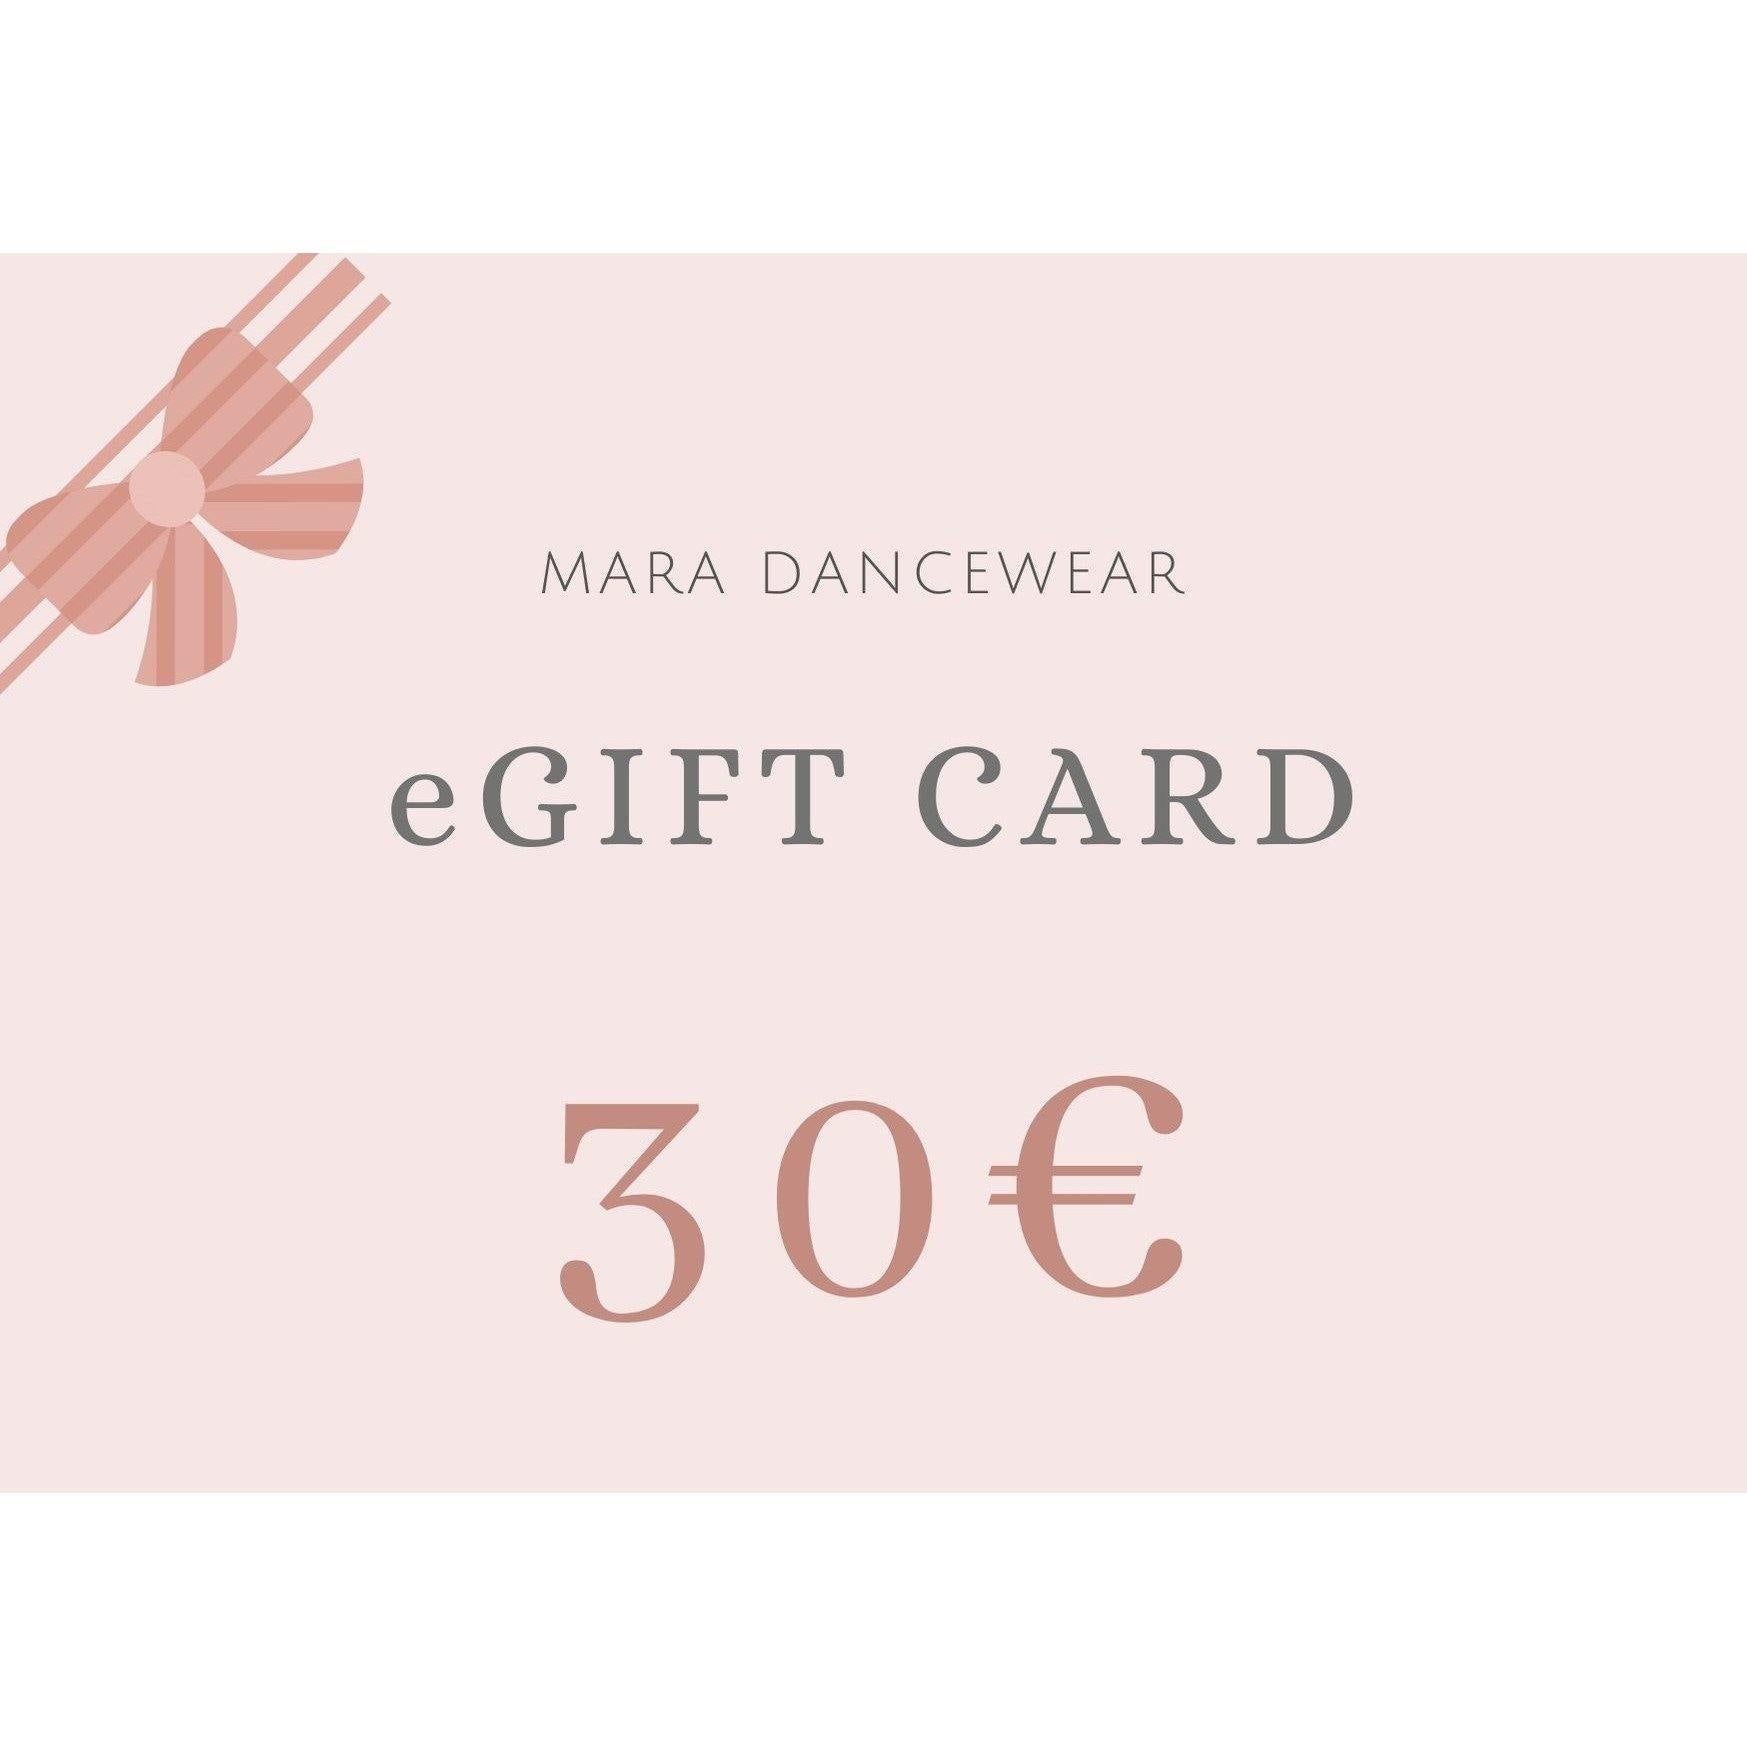 eGift Card - Mara Dancewear - Mara Dancewear